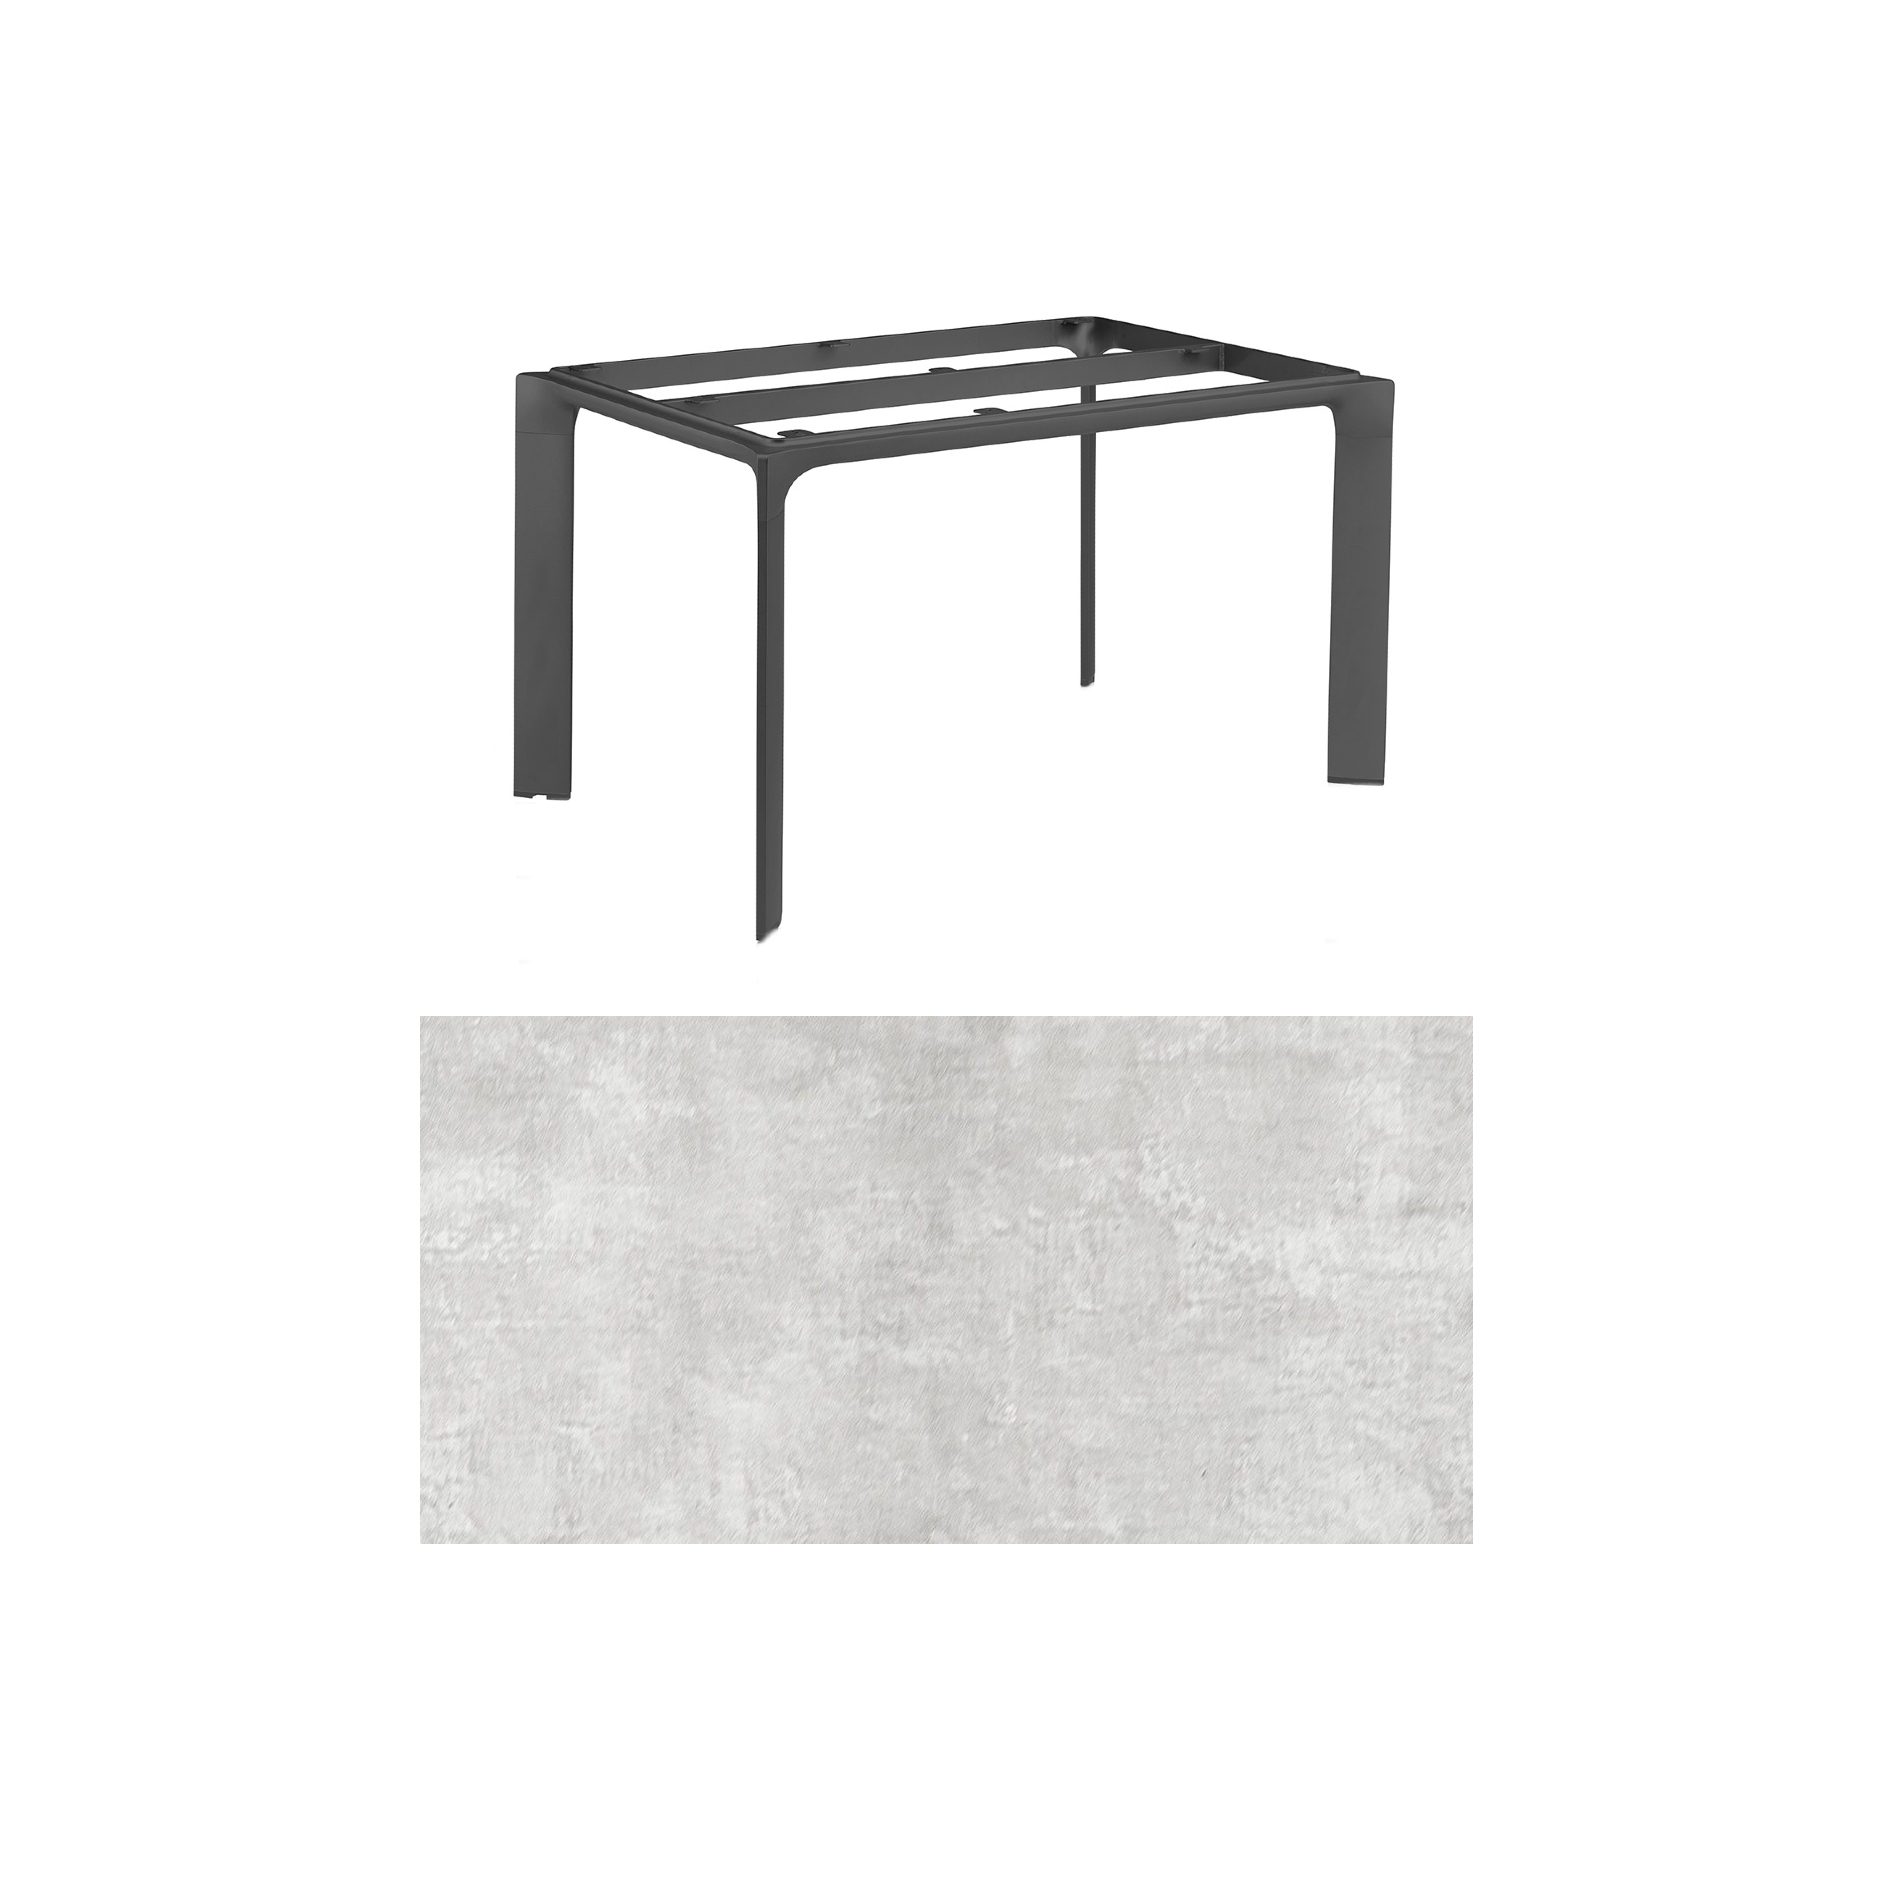 Kettler "Diamond" Tischsystem Gartentisch, Gestell Aluminium anthrazit, Tischplatte HPL hellgrau meliert, 140x70 cm